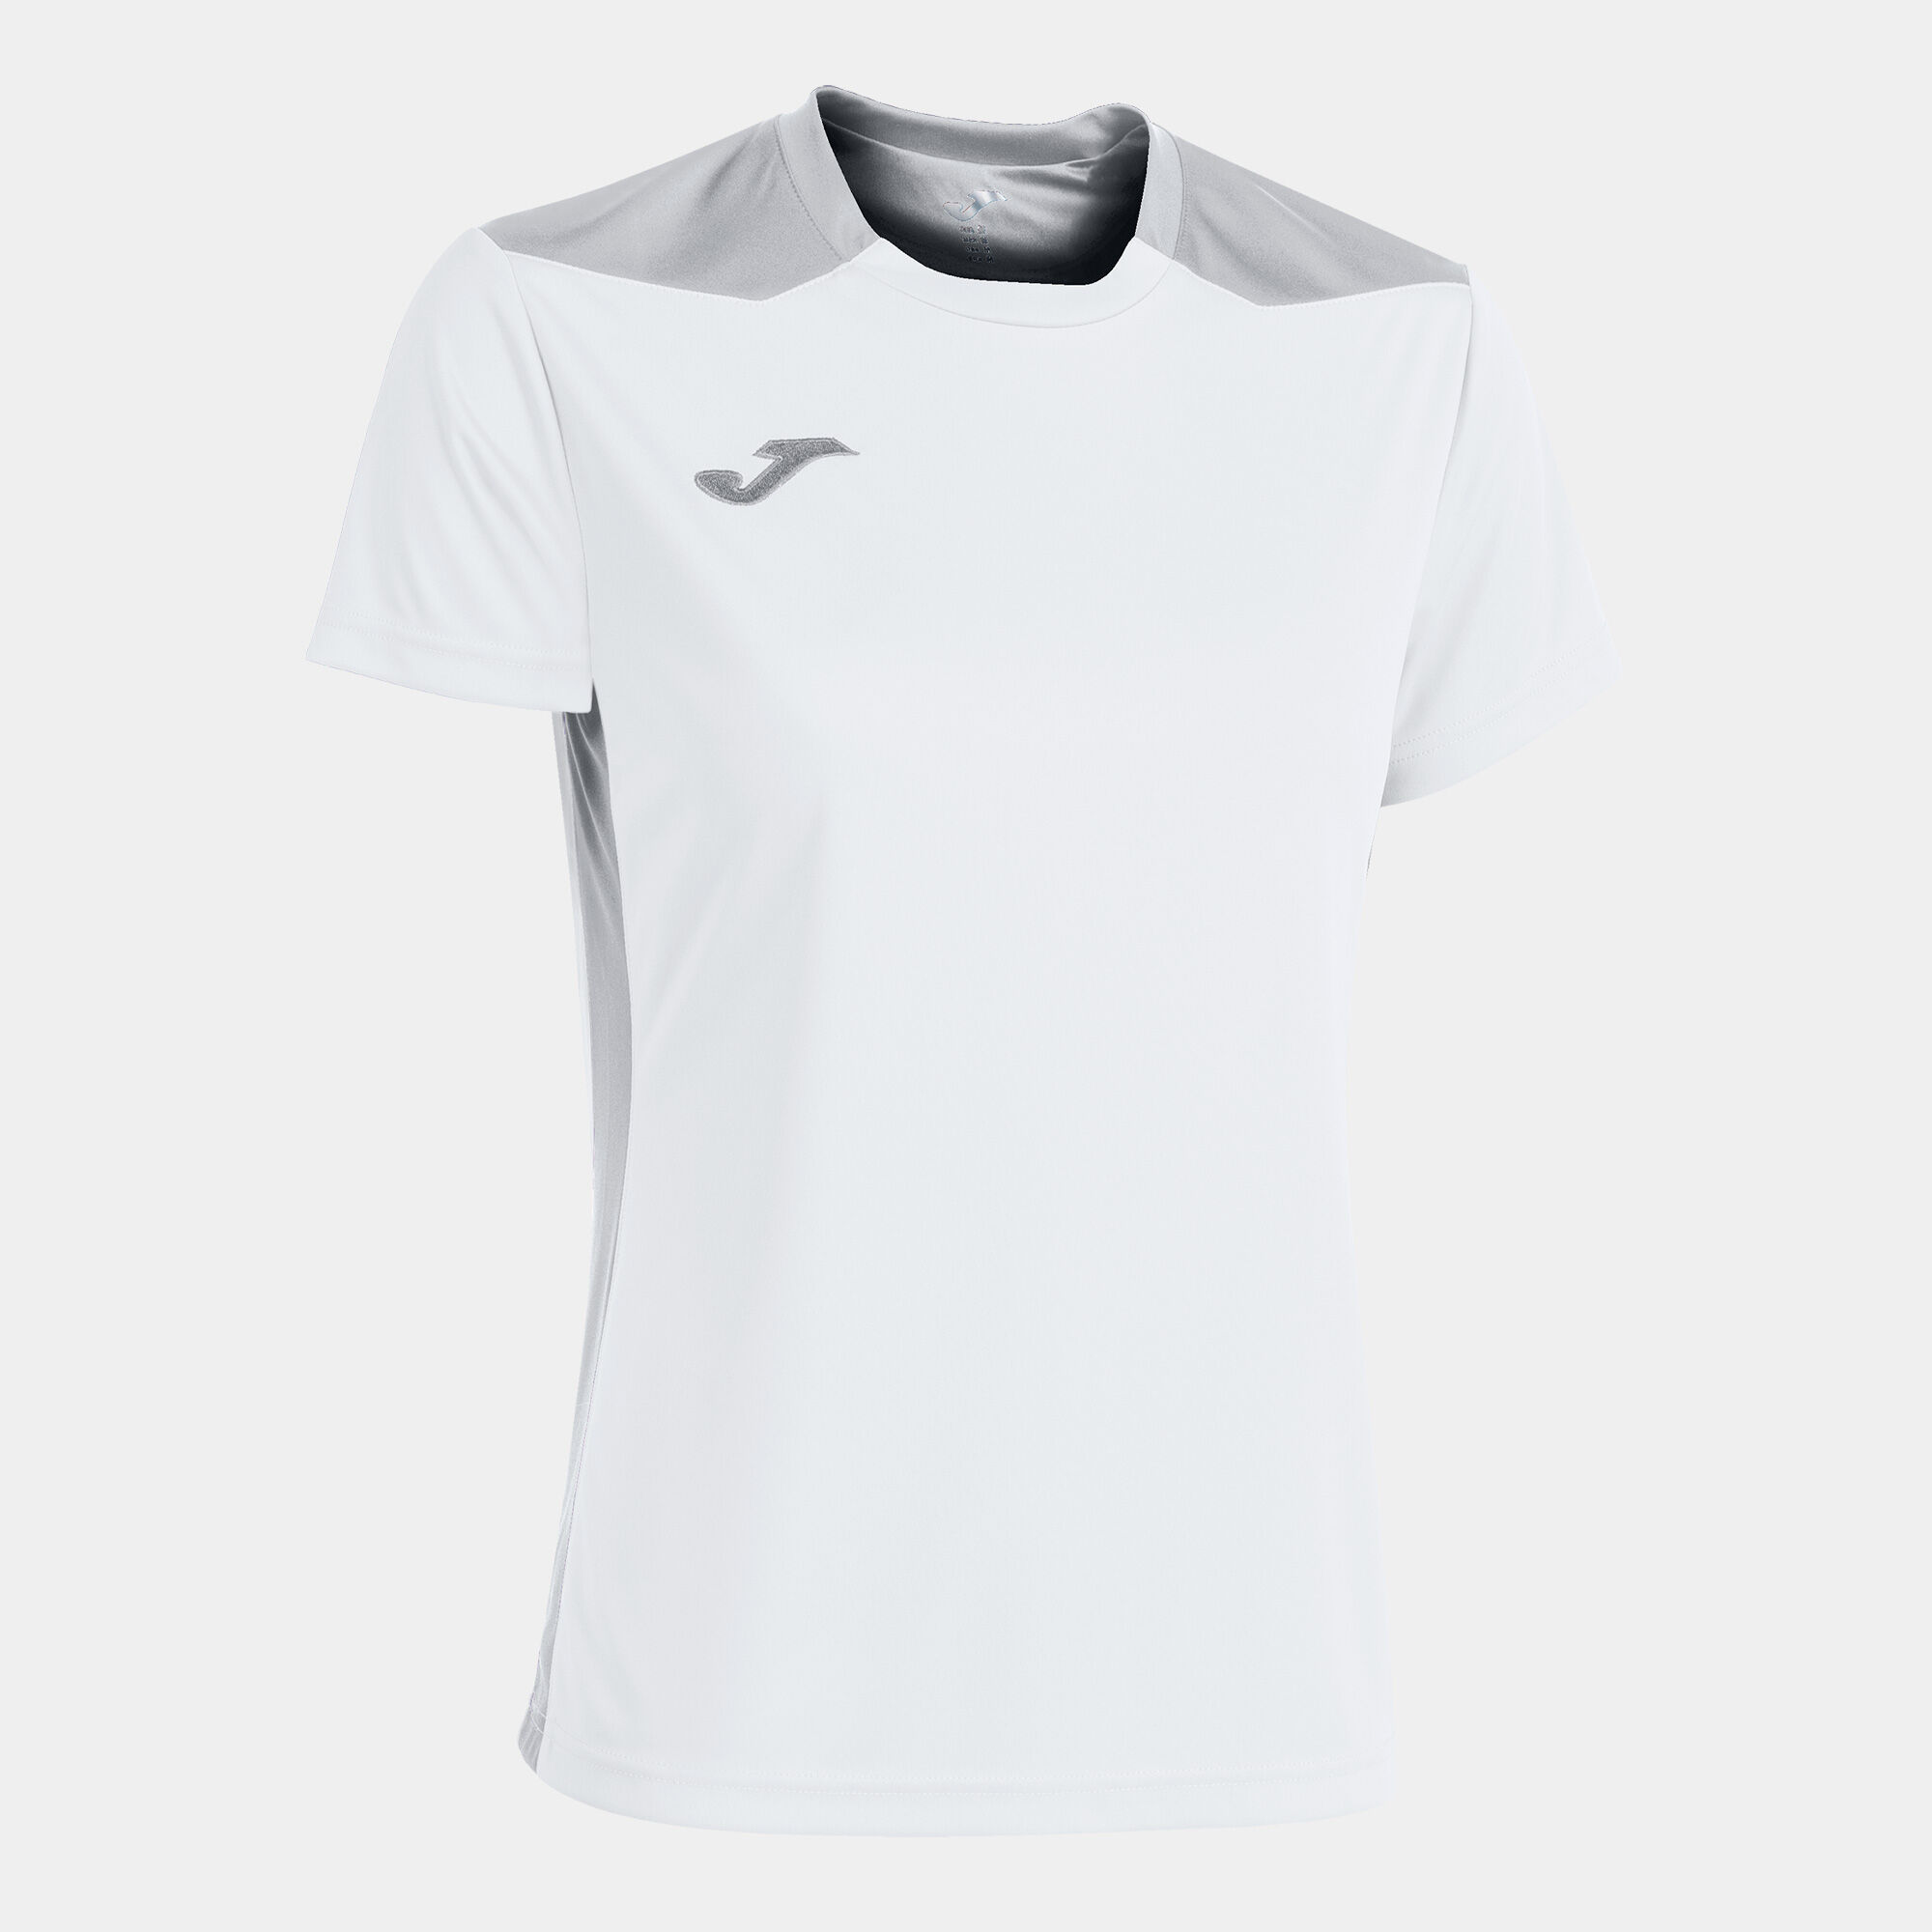 Camiseta manga corta mujer Championship VI blanco gris